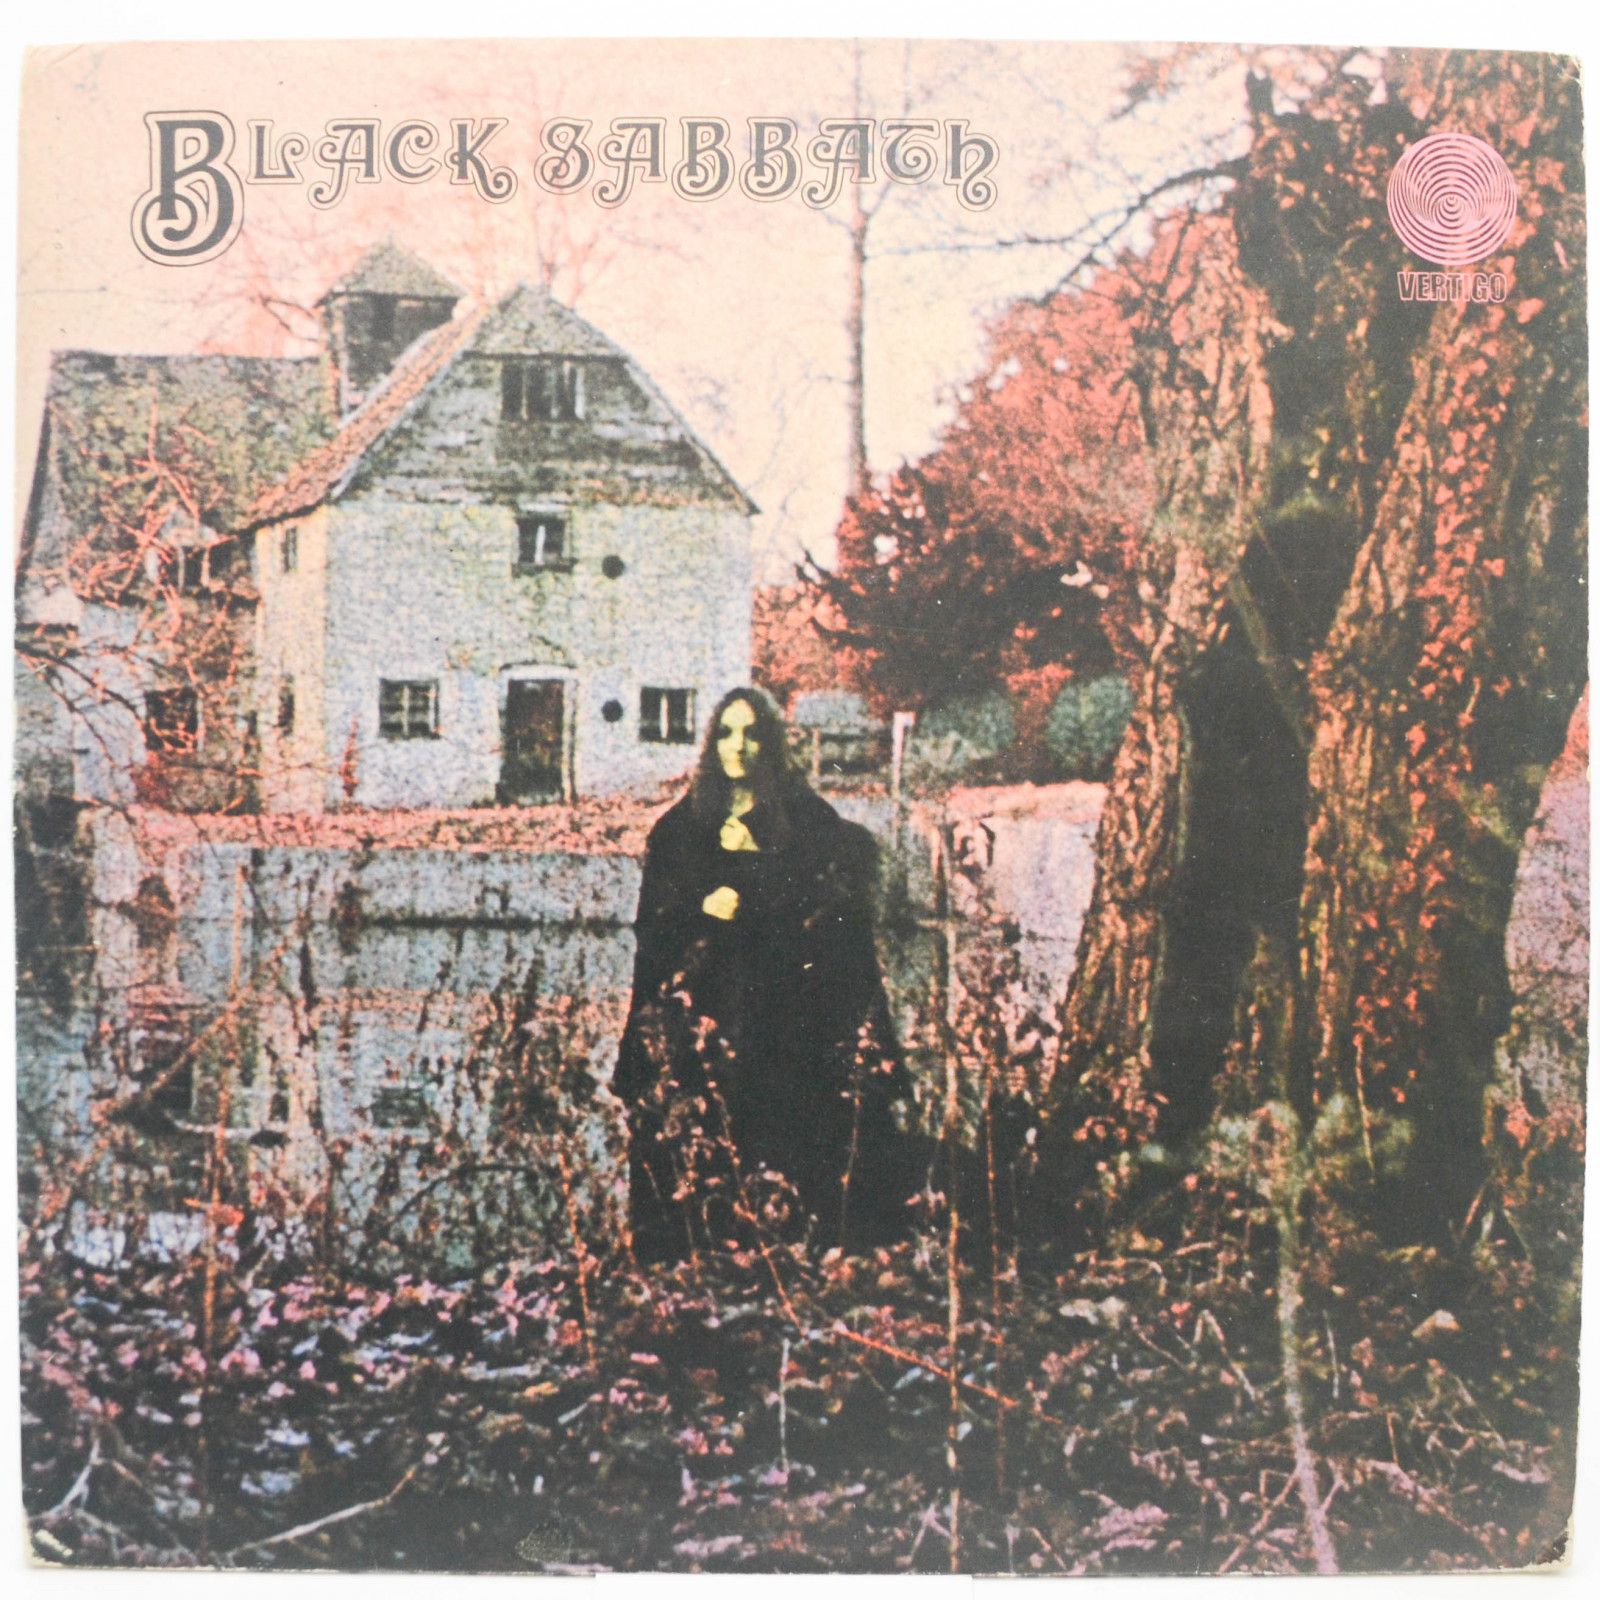 Black Sabbath — Black Sabbath (UK, Vertigo swirl), 1970